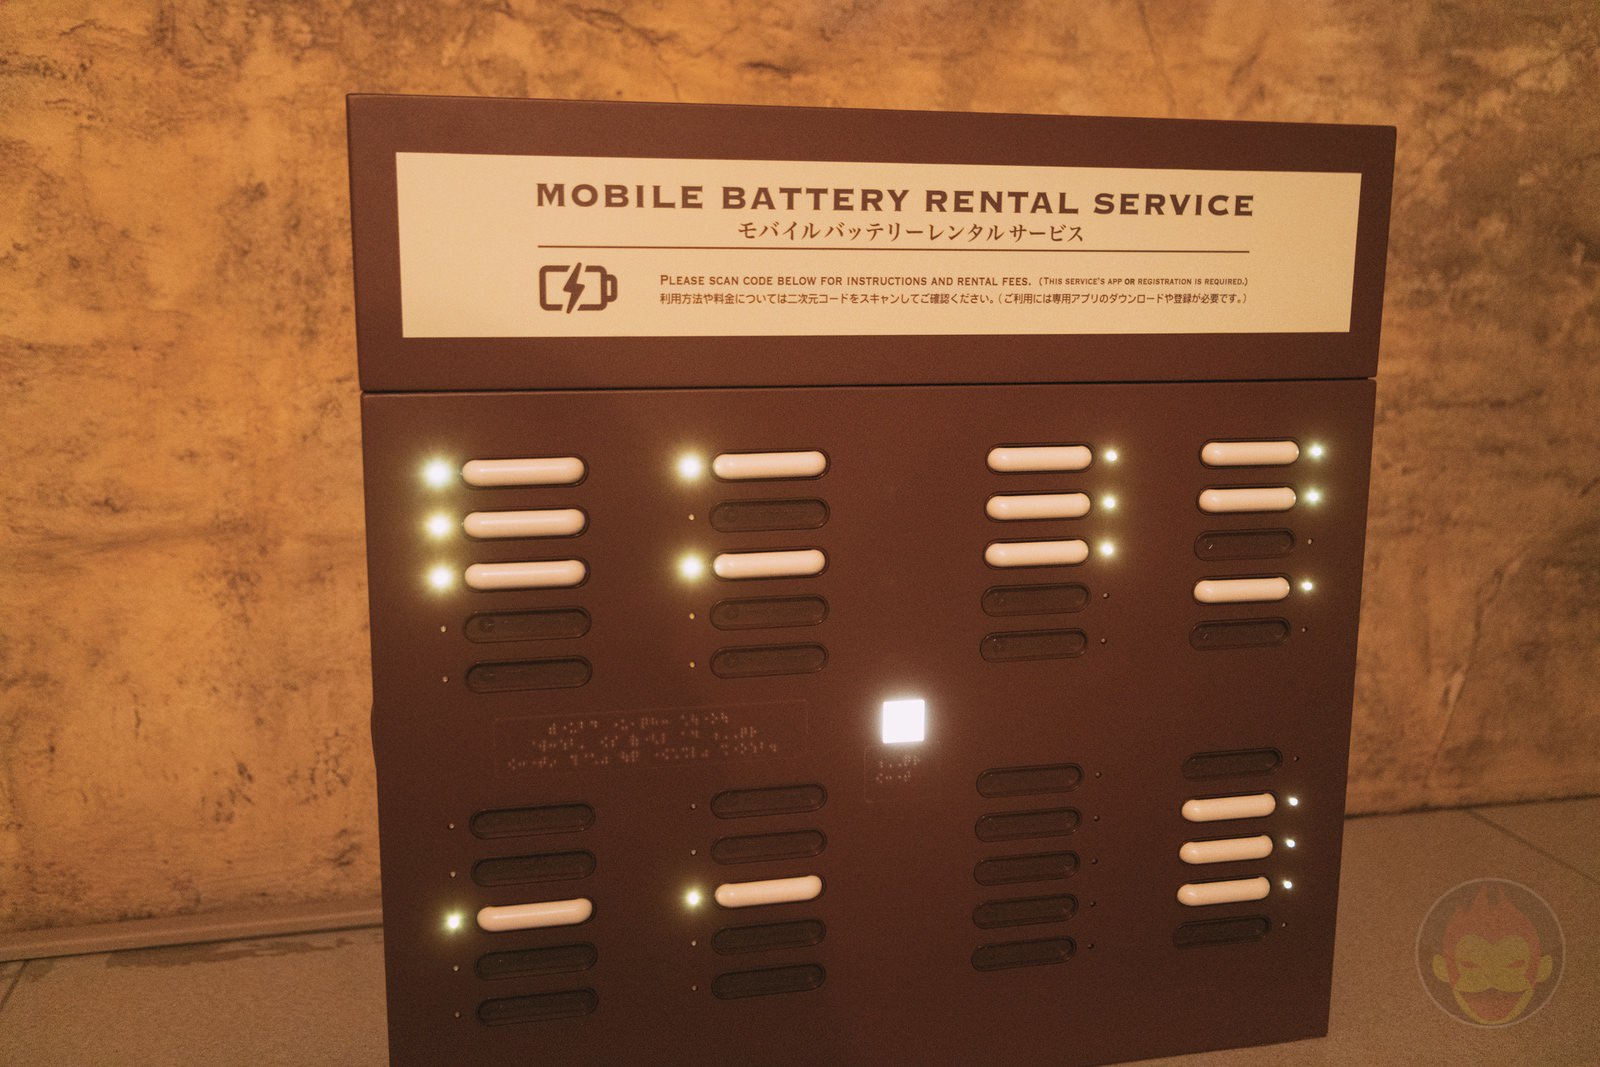 Disney Mobile Battery Rental Service 06